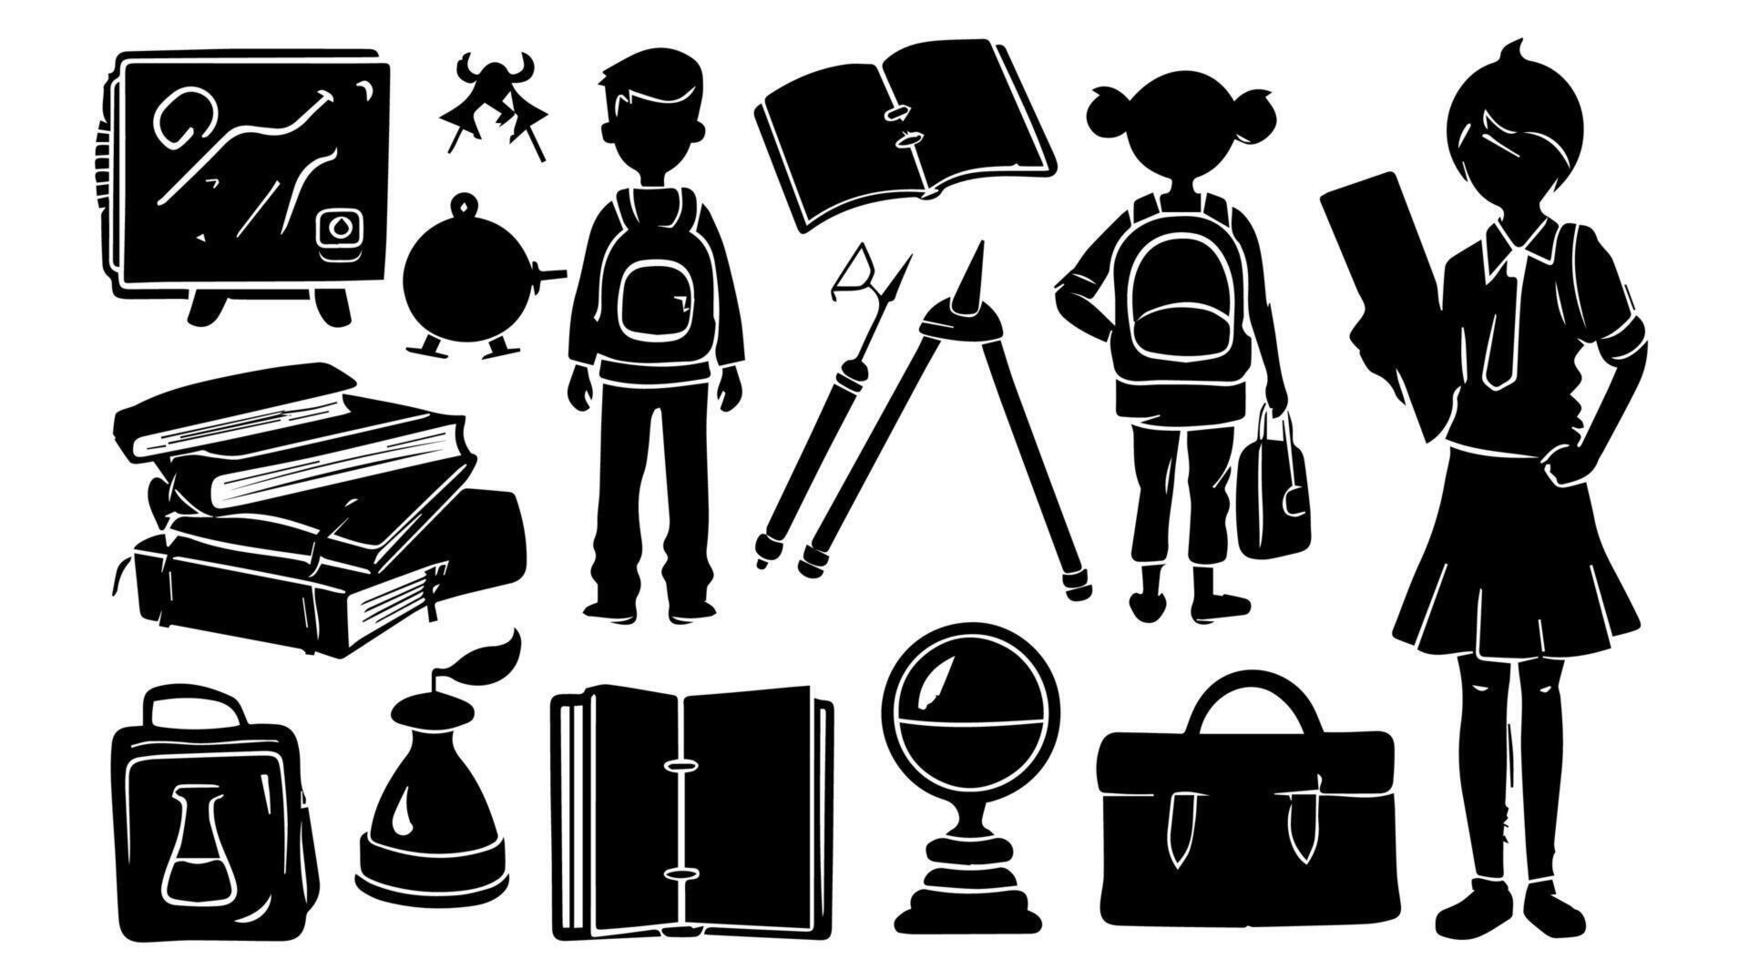 bundle of school supplies icons vector illustration design icon set.